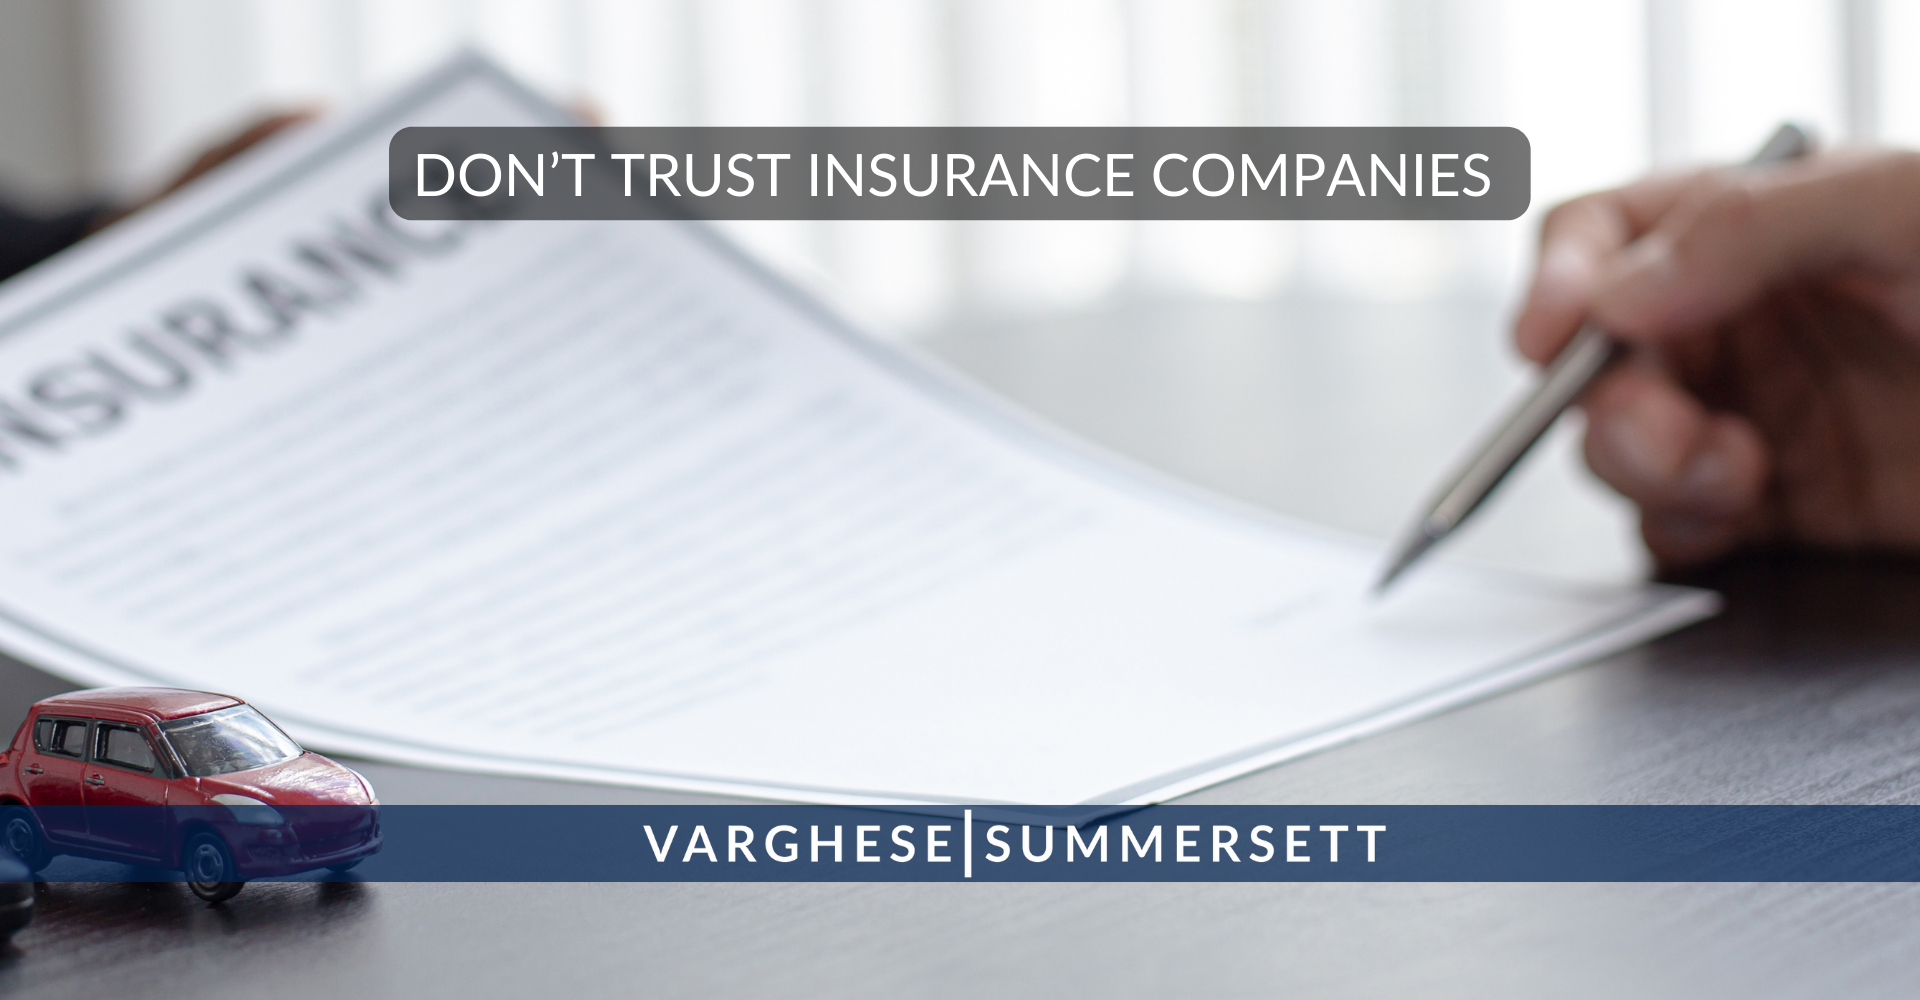 Don't trust insurance companies